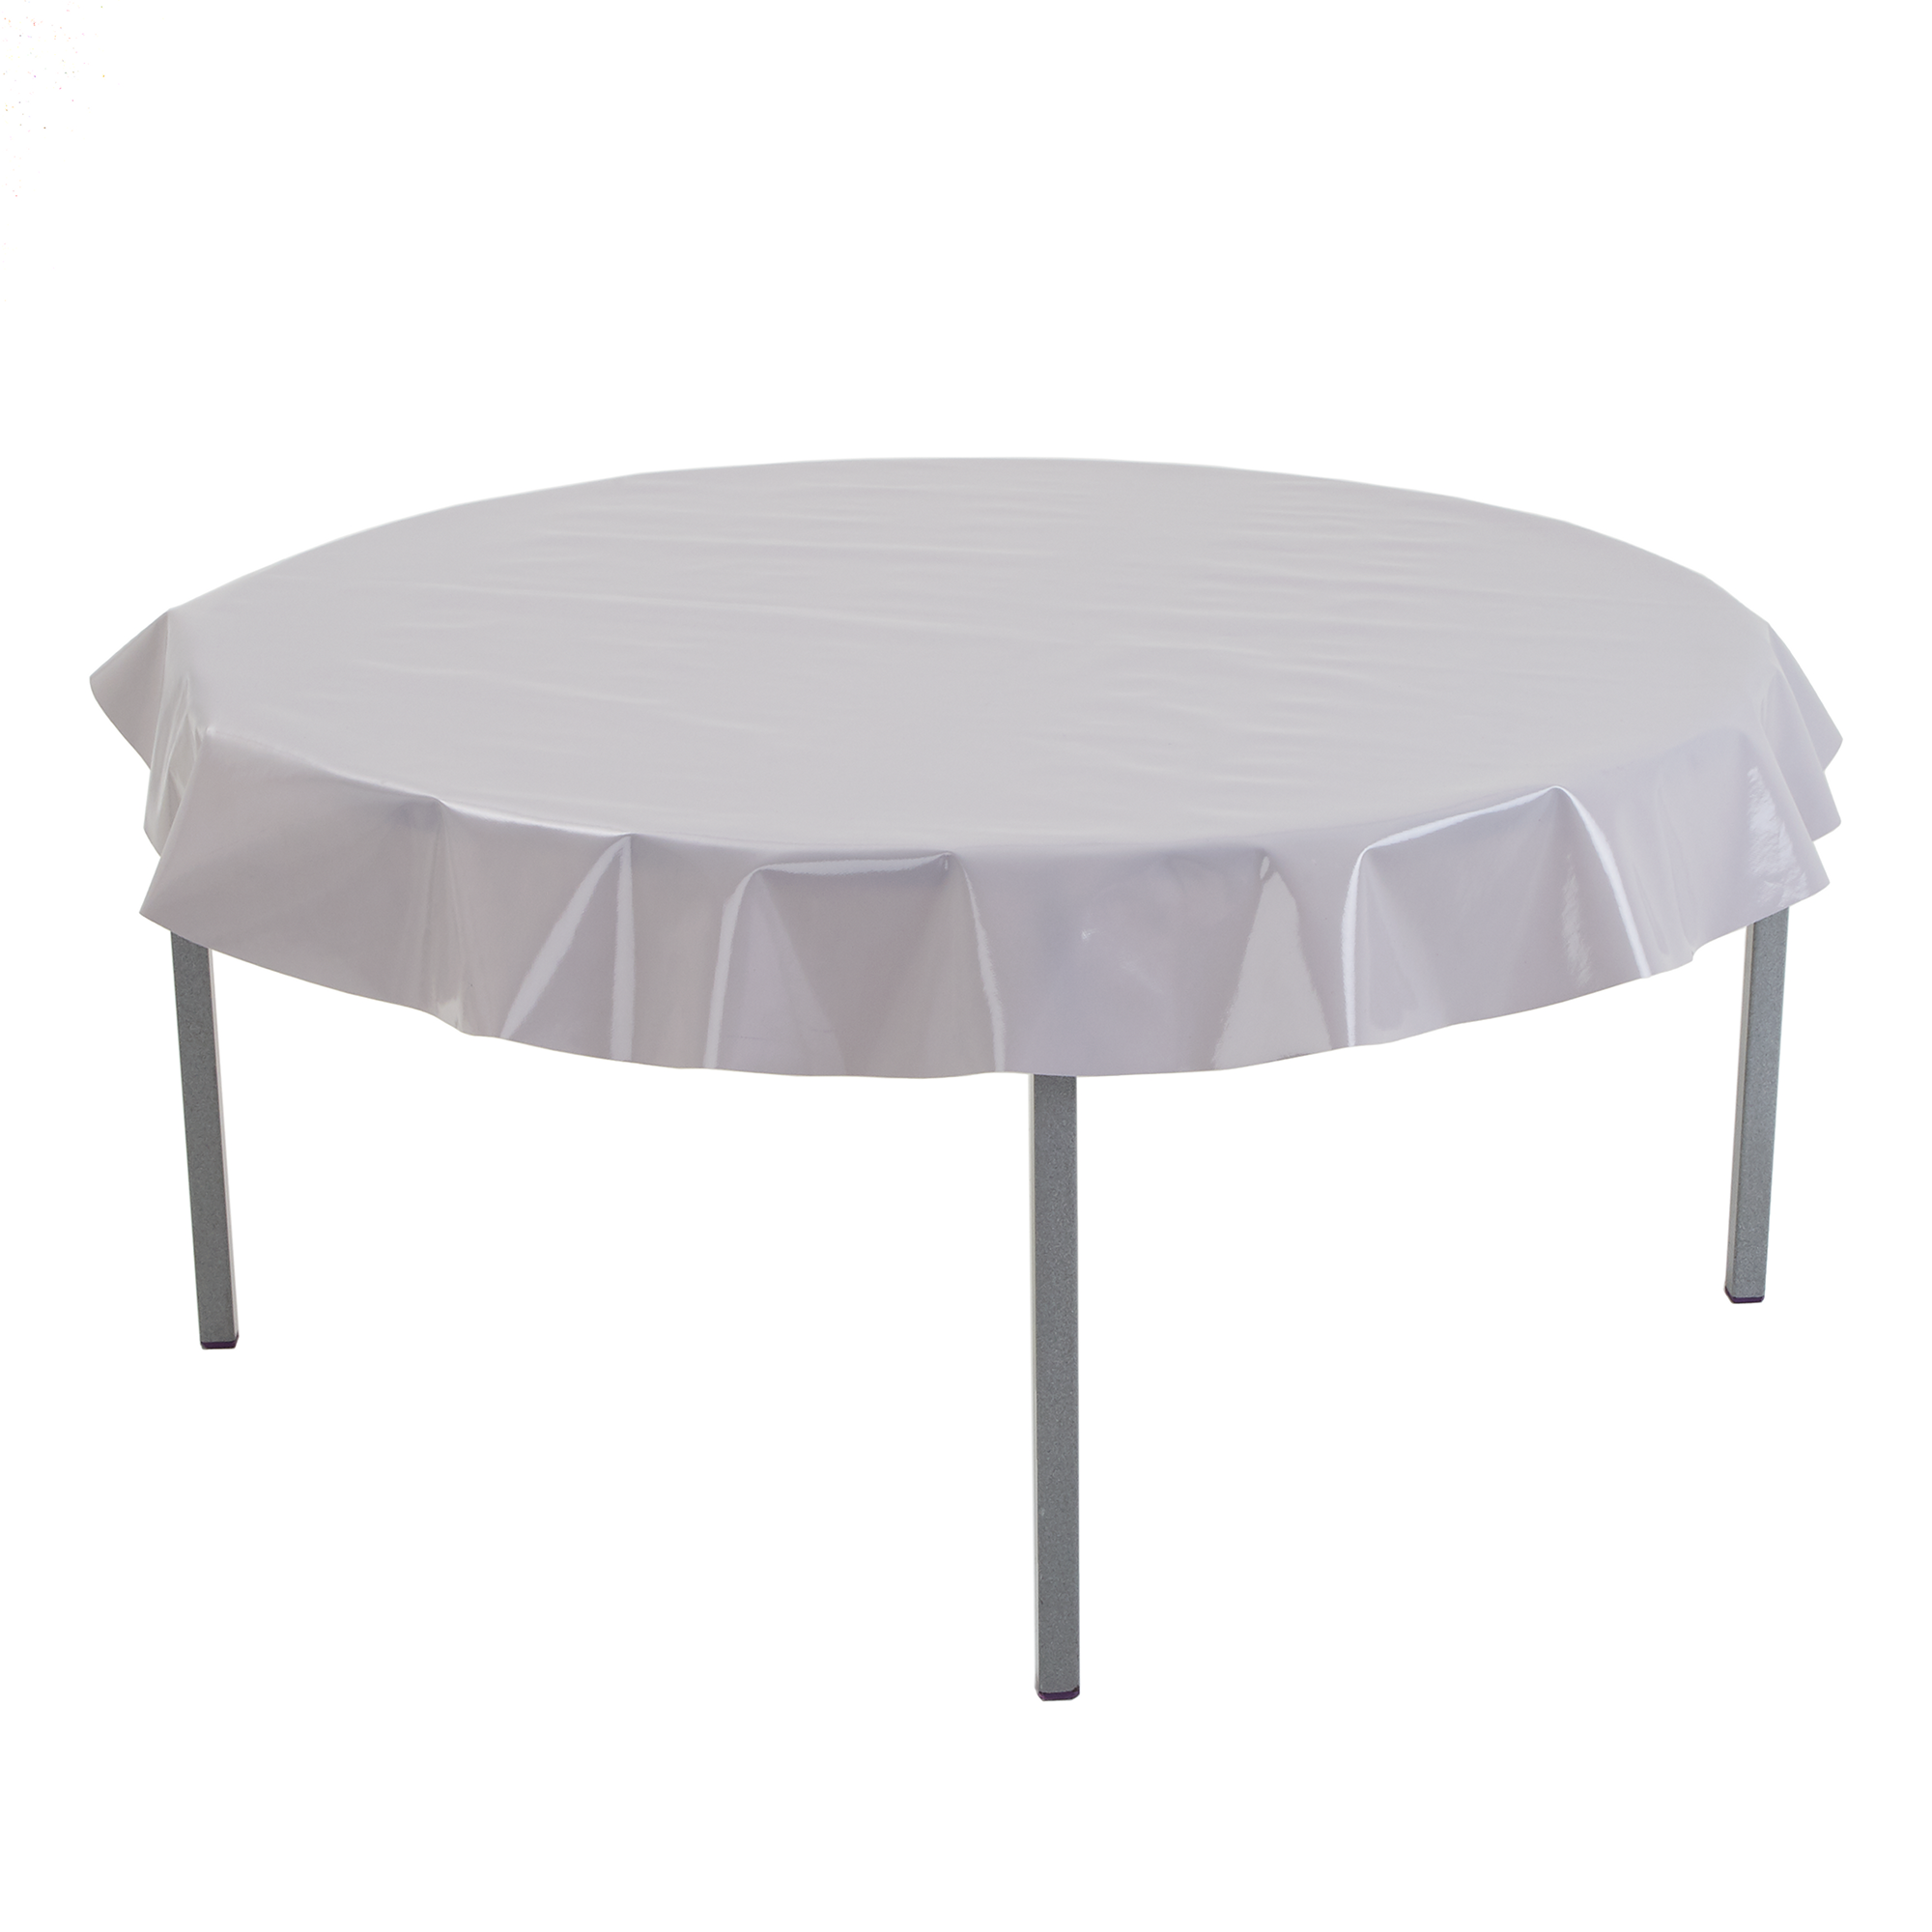 Silver Pvc Tbl Circular Table Cover 1.3m